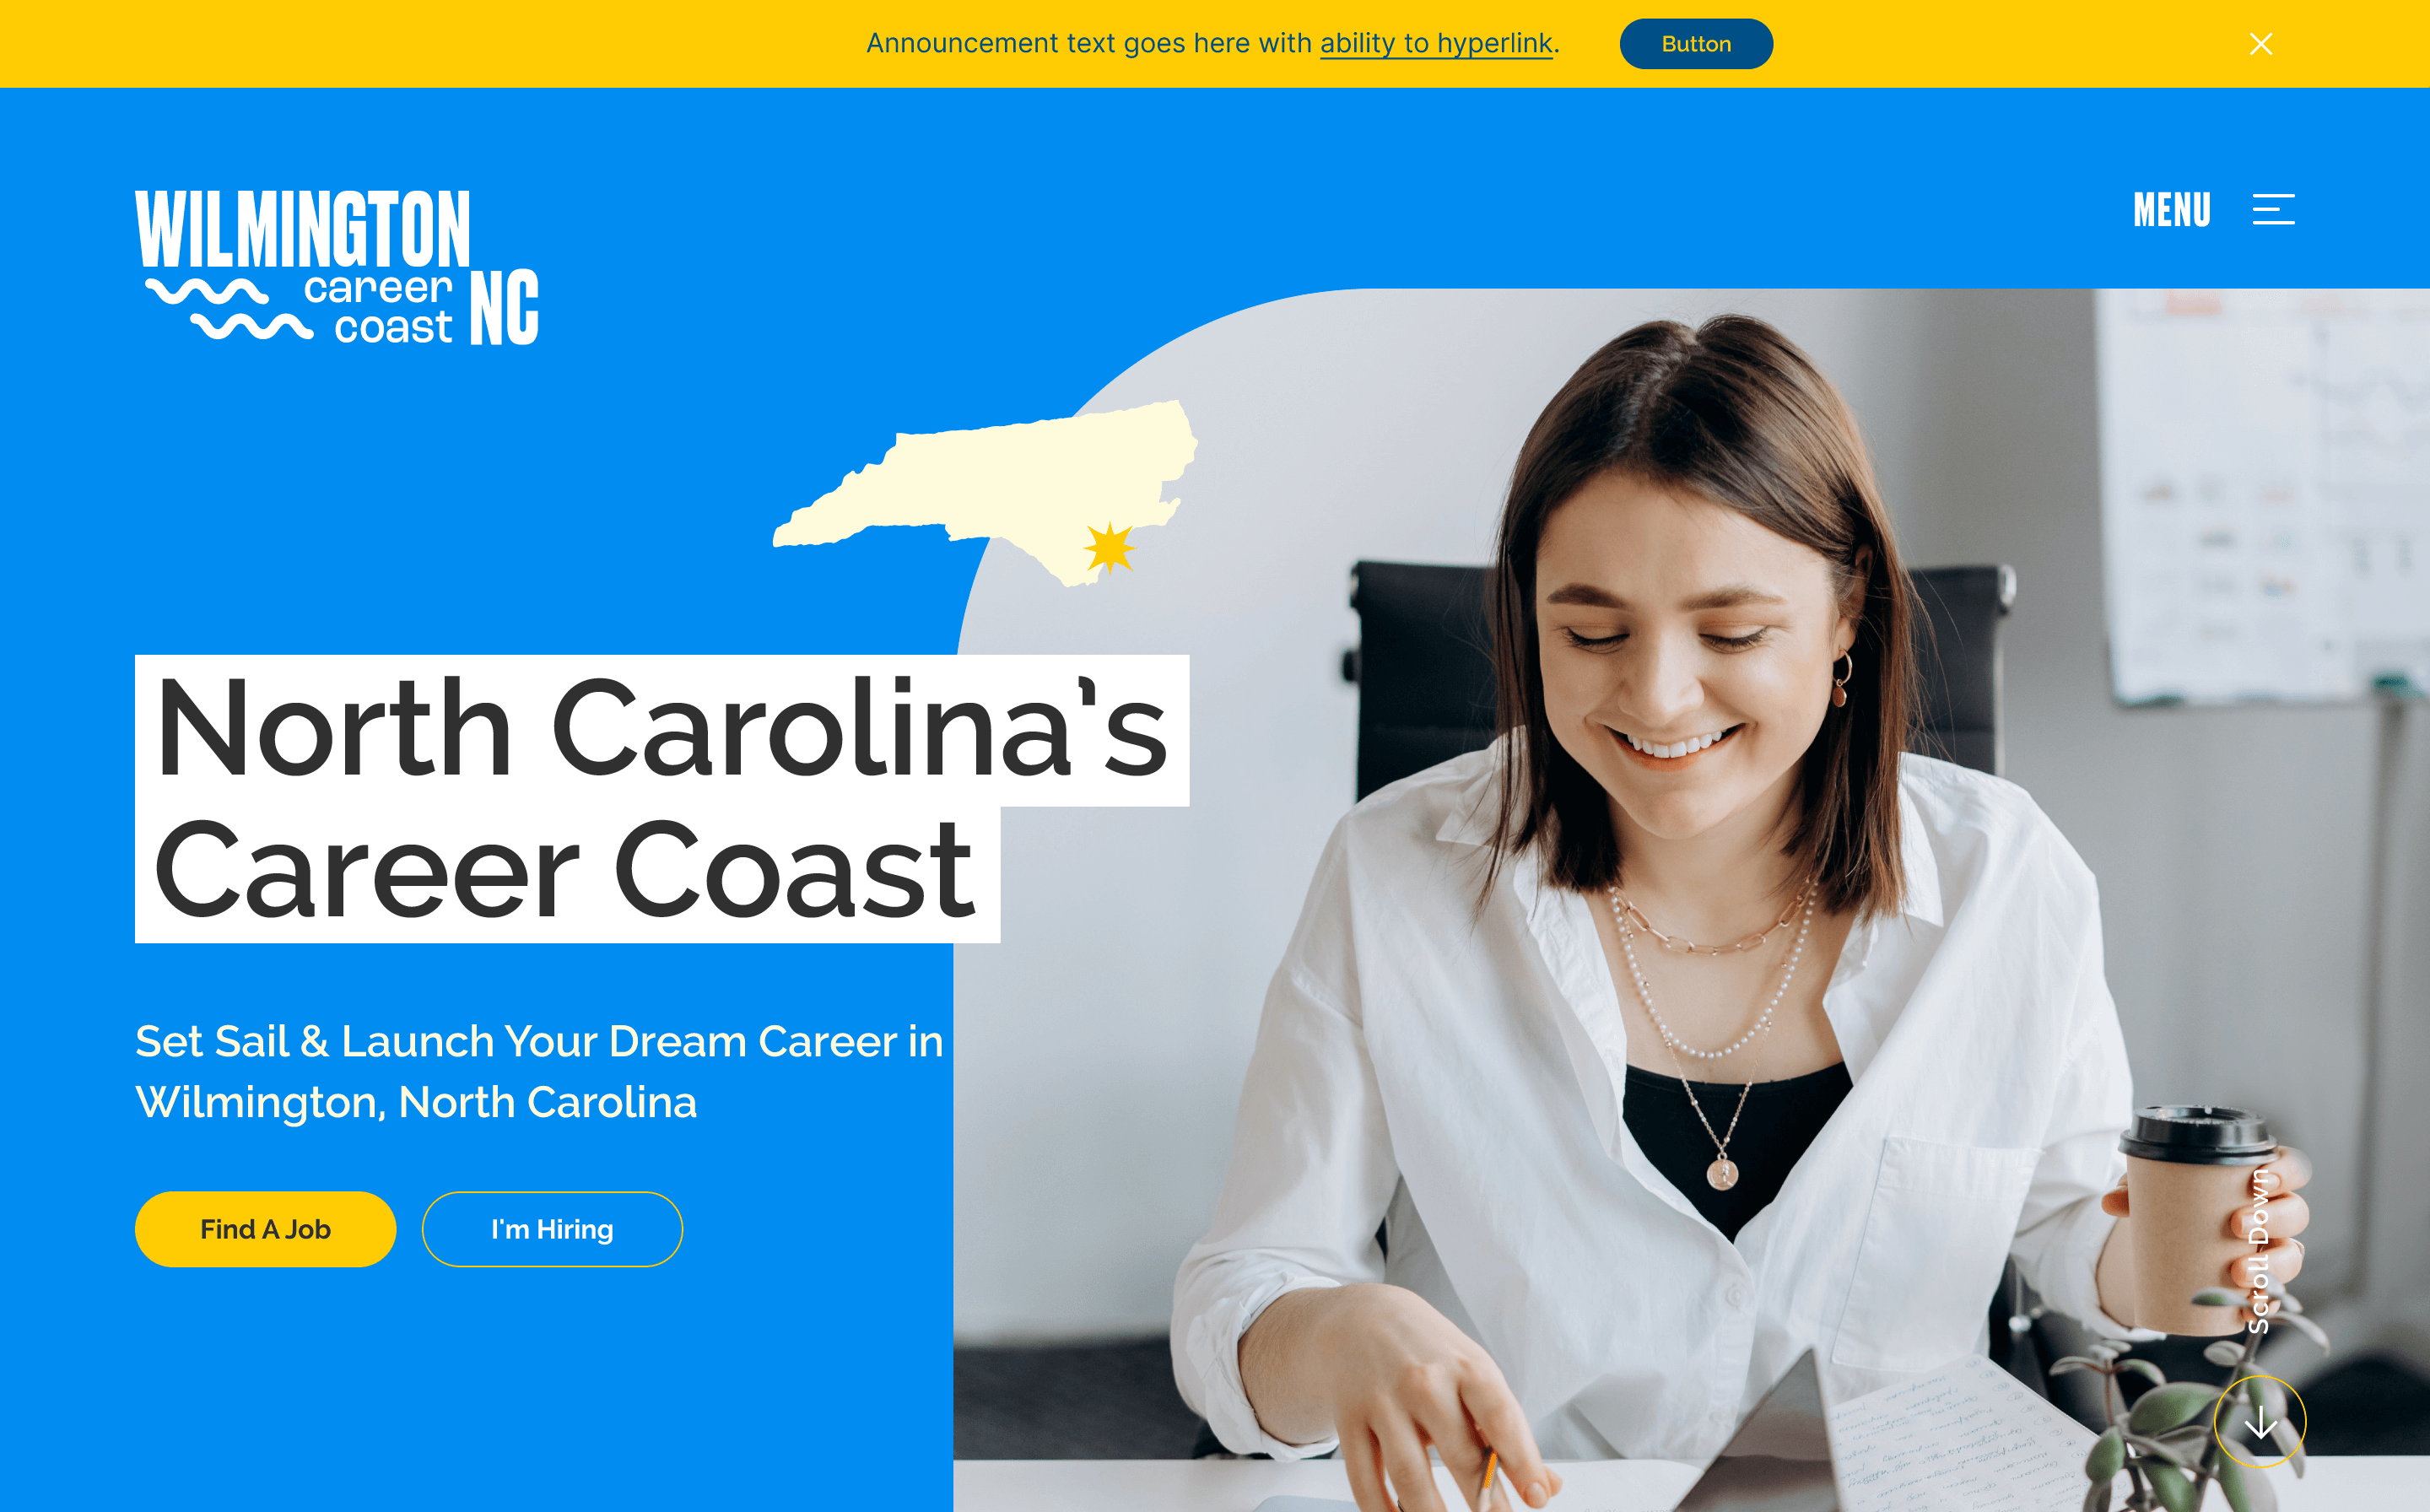 North Carolina's Career Coast website from Wilmington, NC.